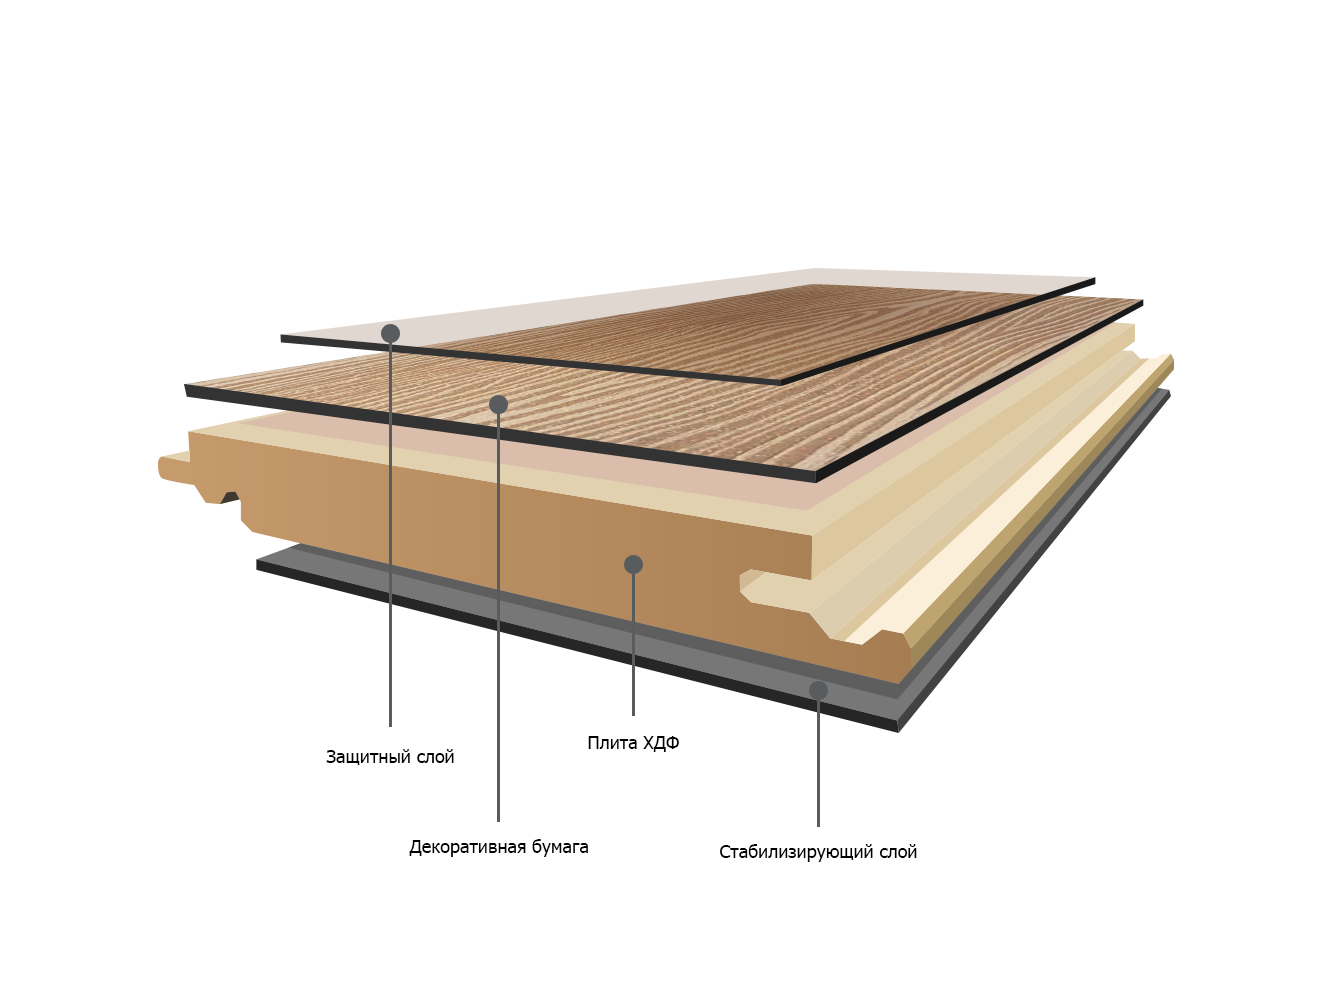 Ламинат классы производители. HDF - High density fiberboard (древесноволокнистая плита высокой плотности). HDF плита в ламинате. Слои ламината ХДФ плита. SPC ламинат structure.